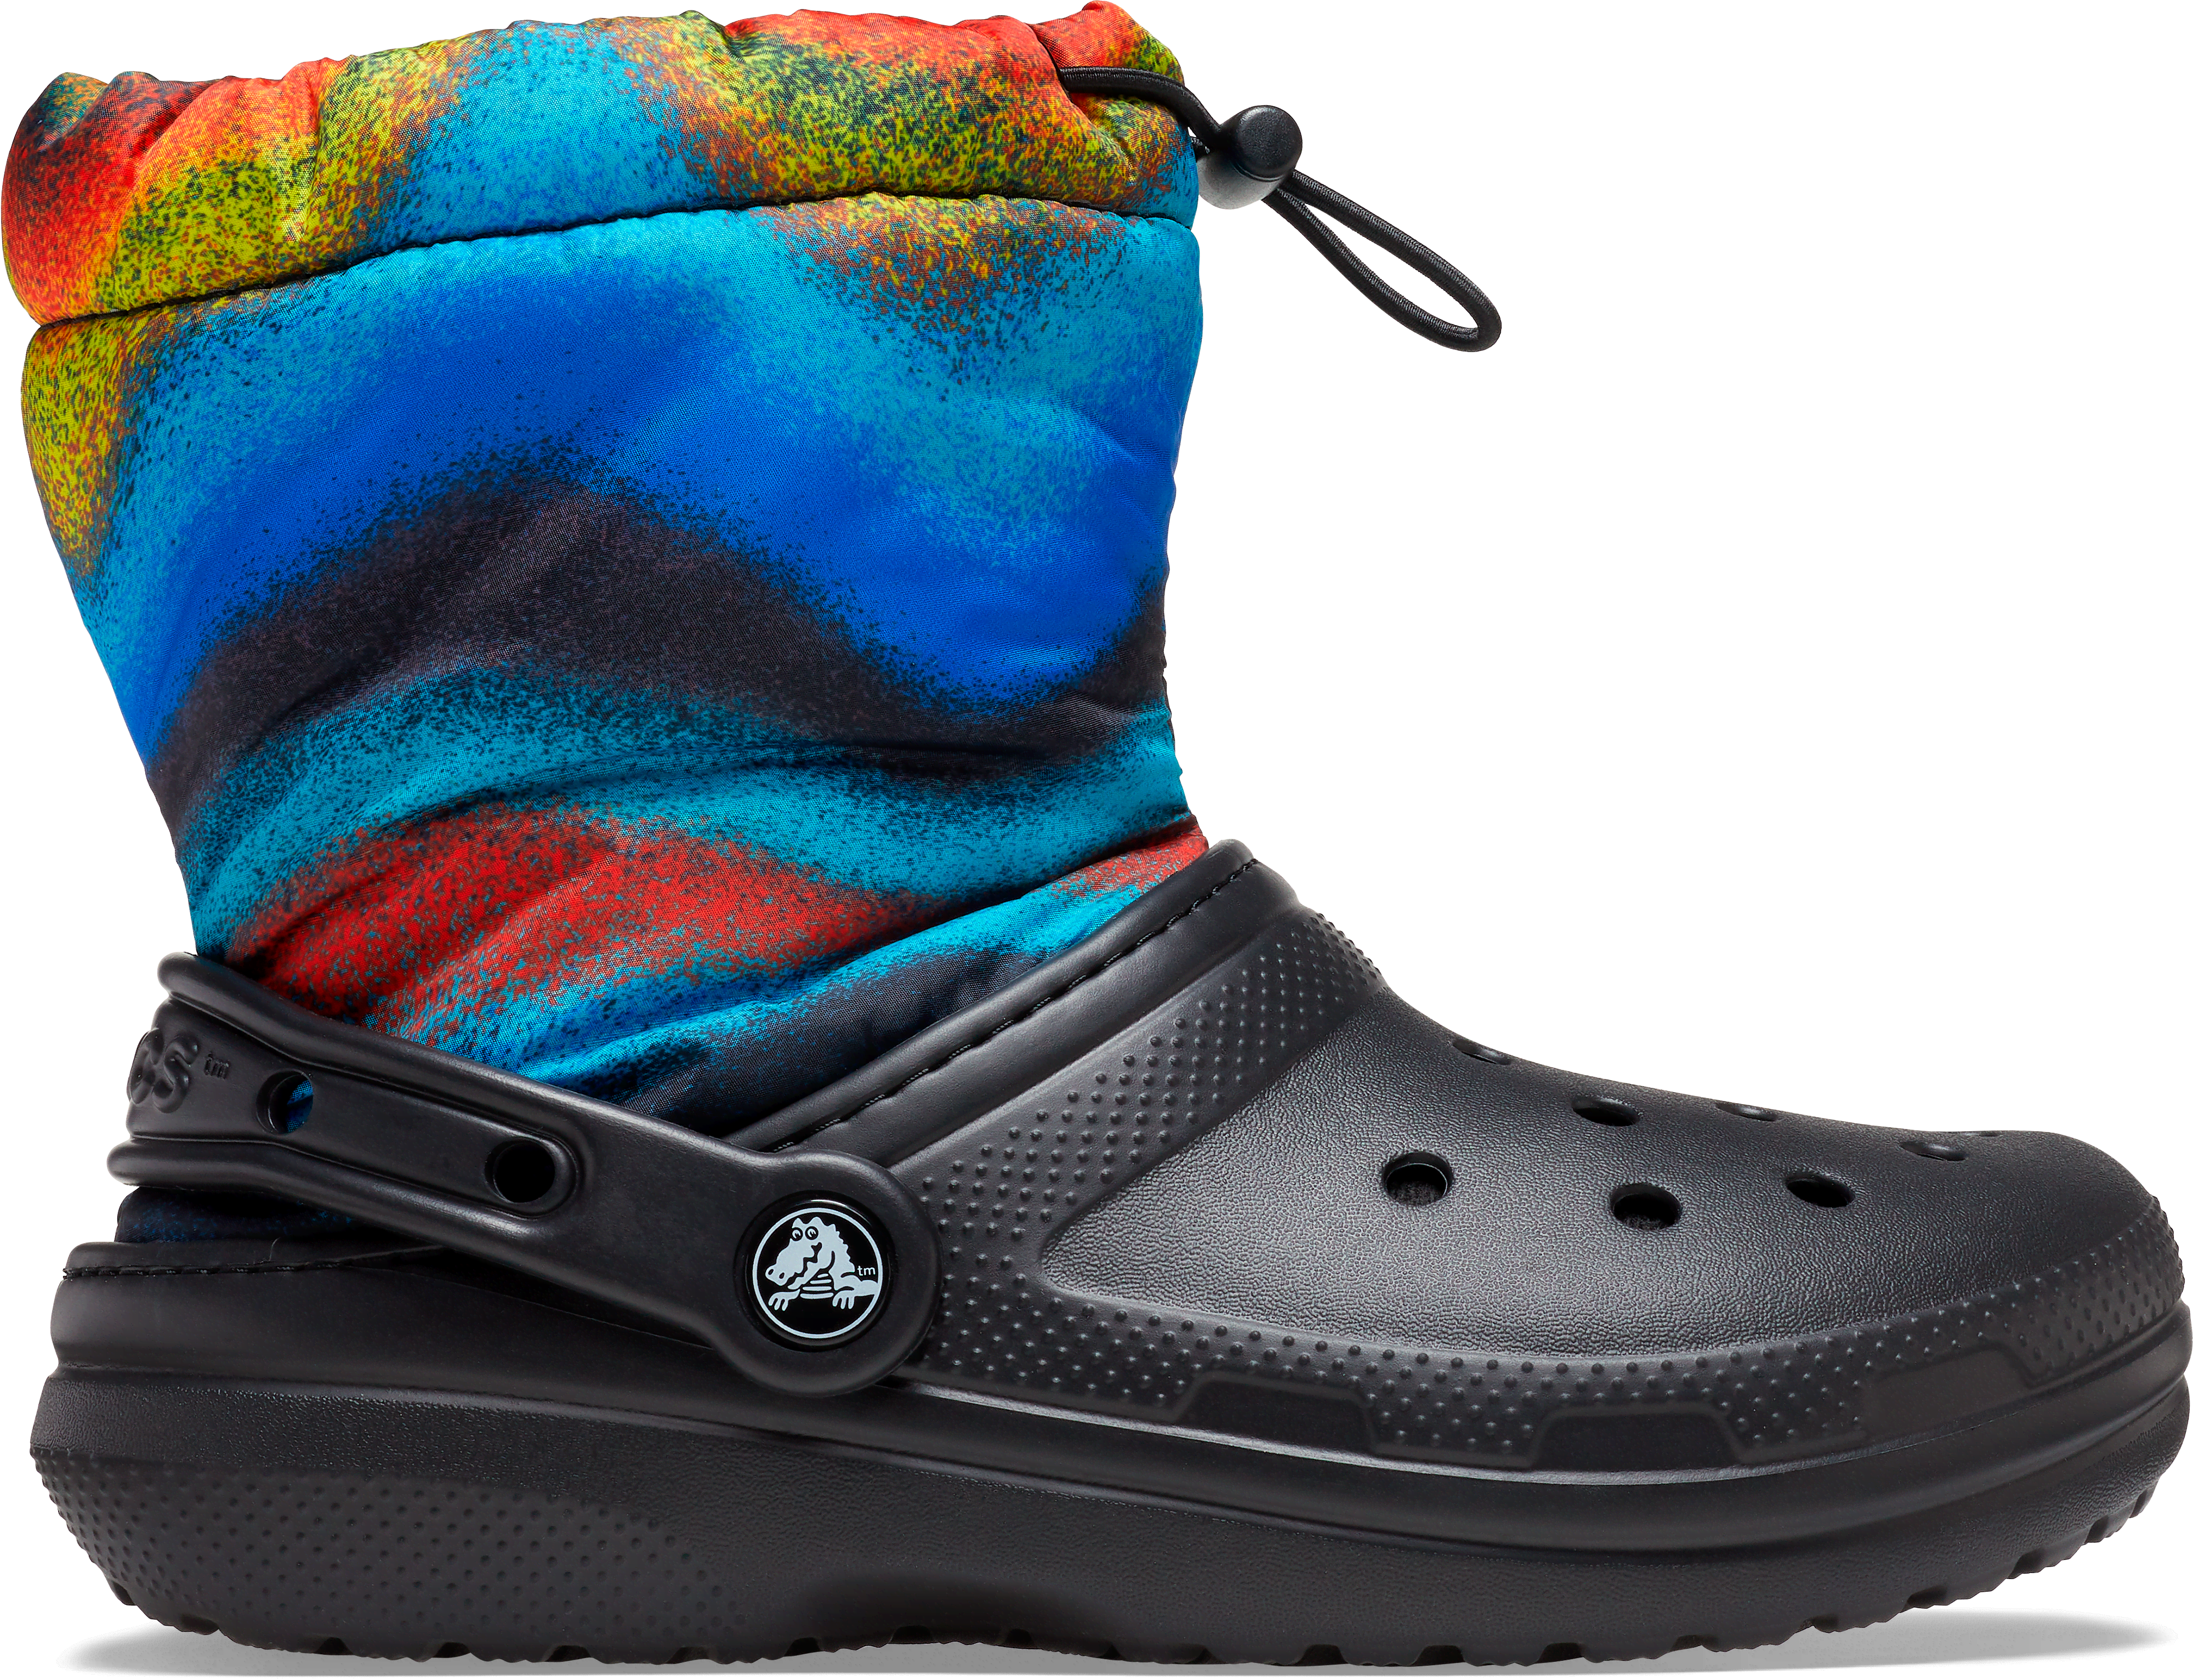 Crocs | Kids | Classic Lined Spray Dye Neo Puff Boot | Boots | Black / Multi | C13